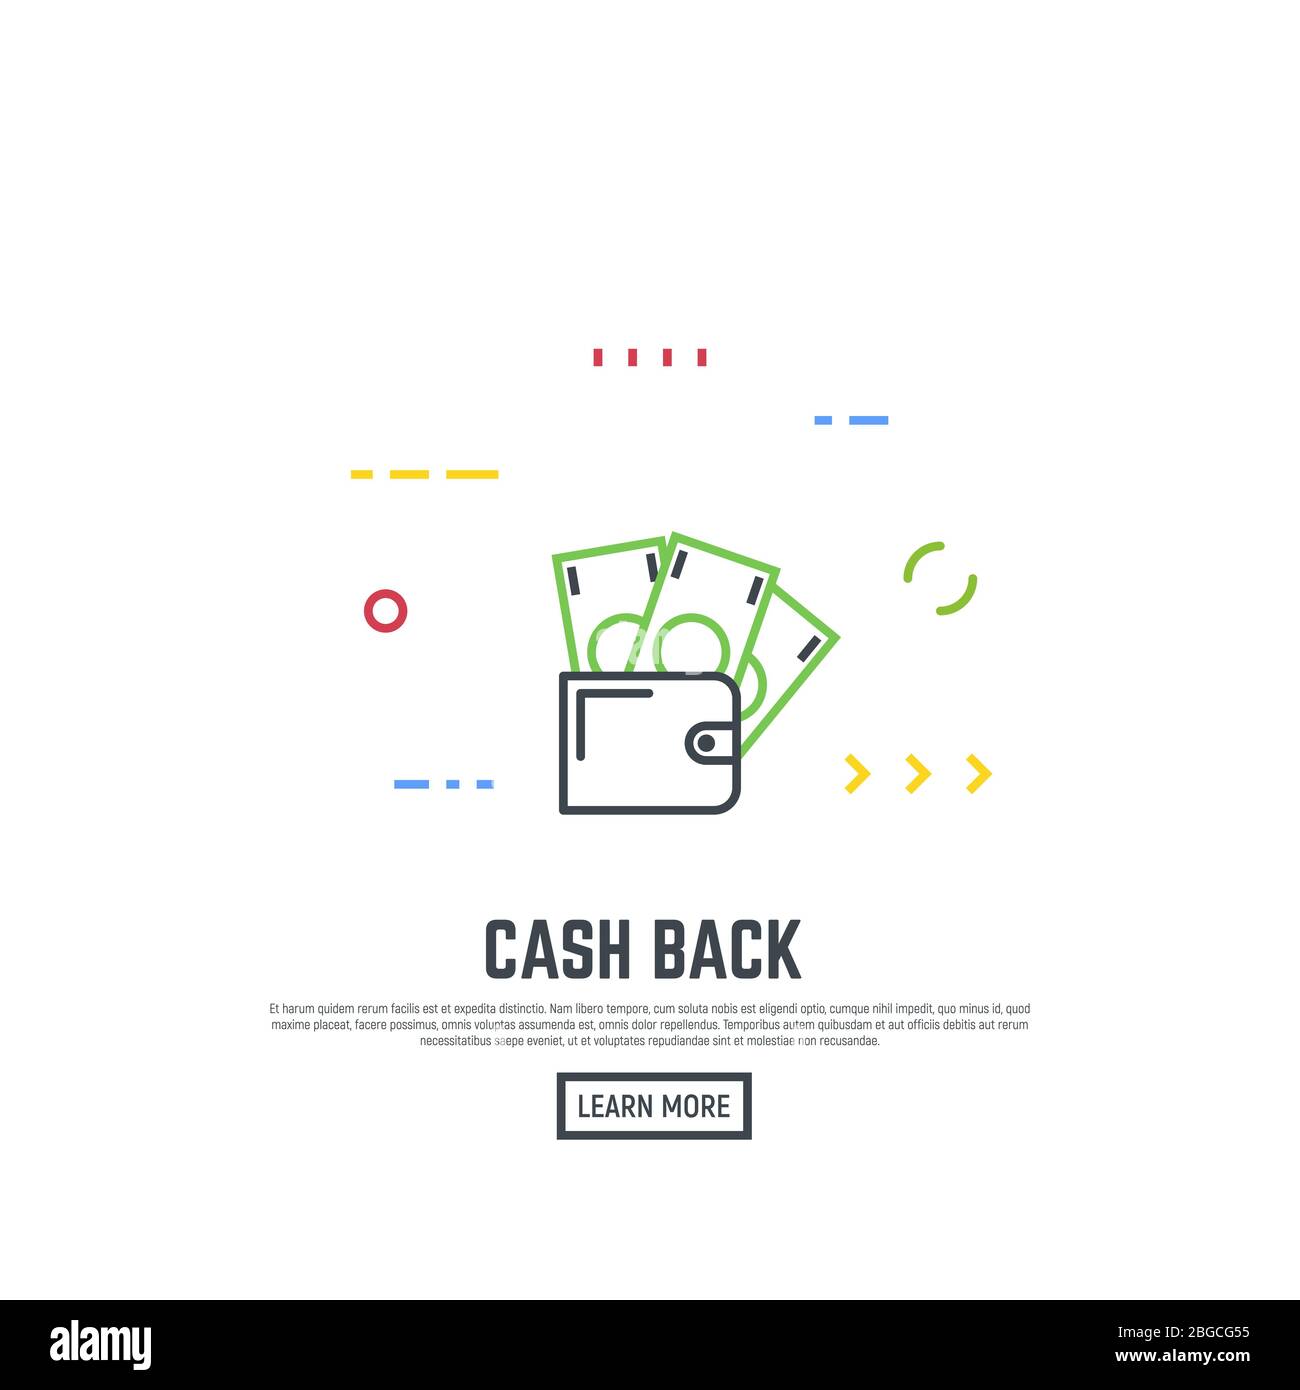 Cash back banner. Leather wallet with paper dollars, coins. Cashback money concept. Business offer and cash return option. Modern line vector banner. Stock Vector